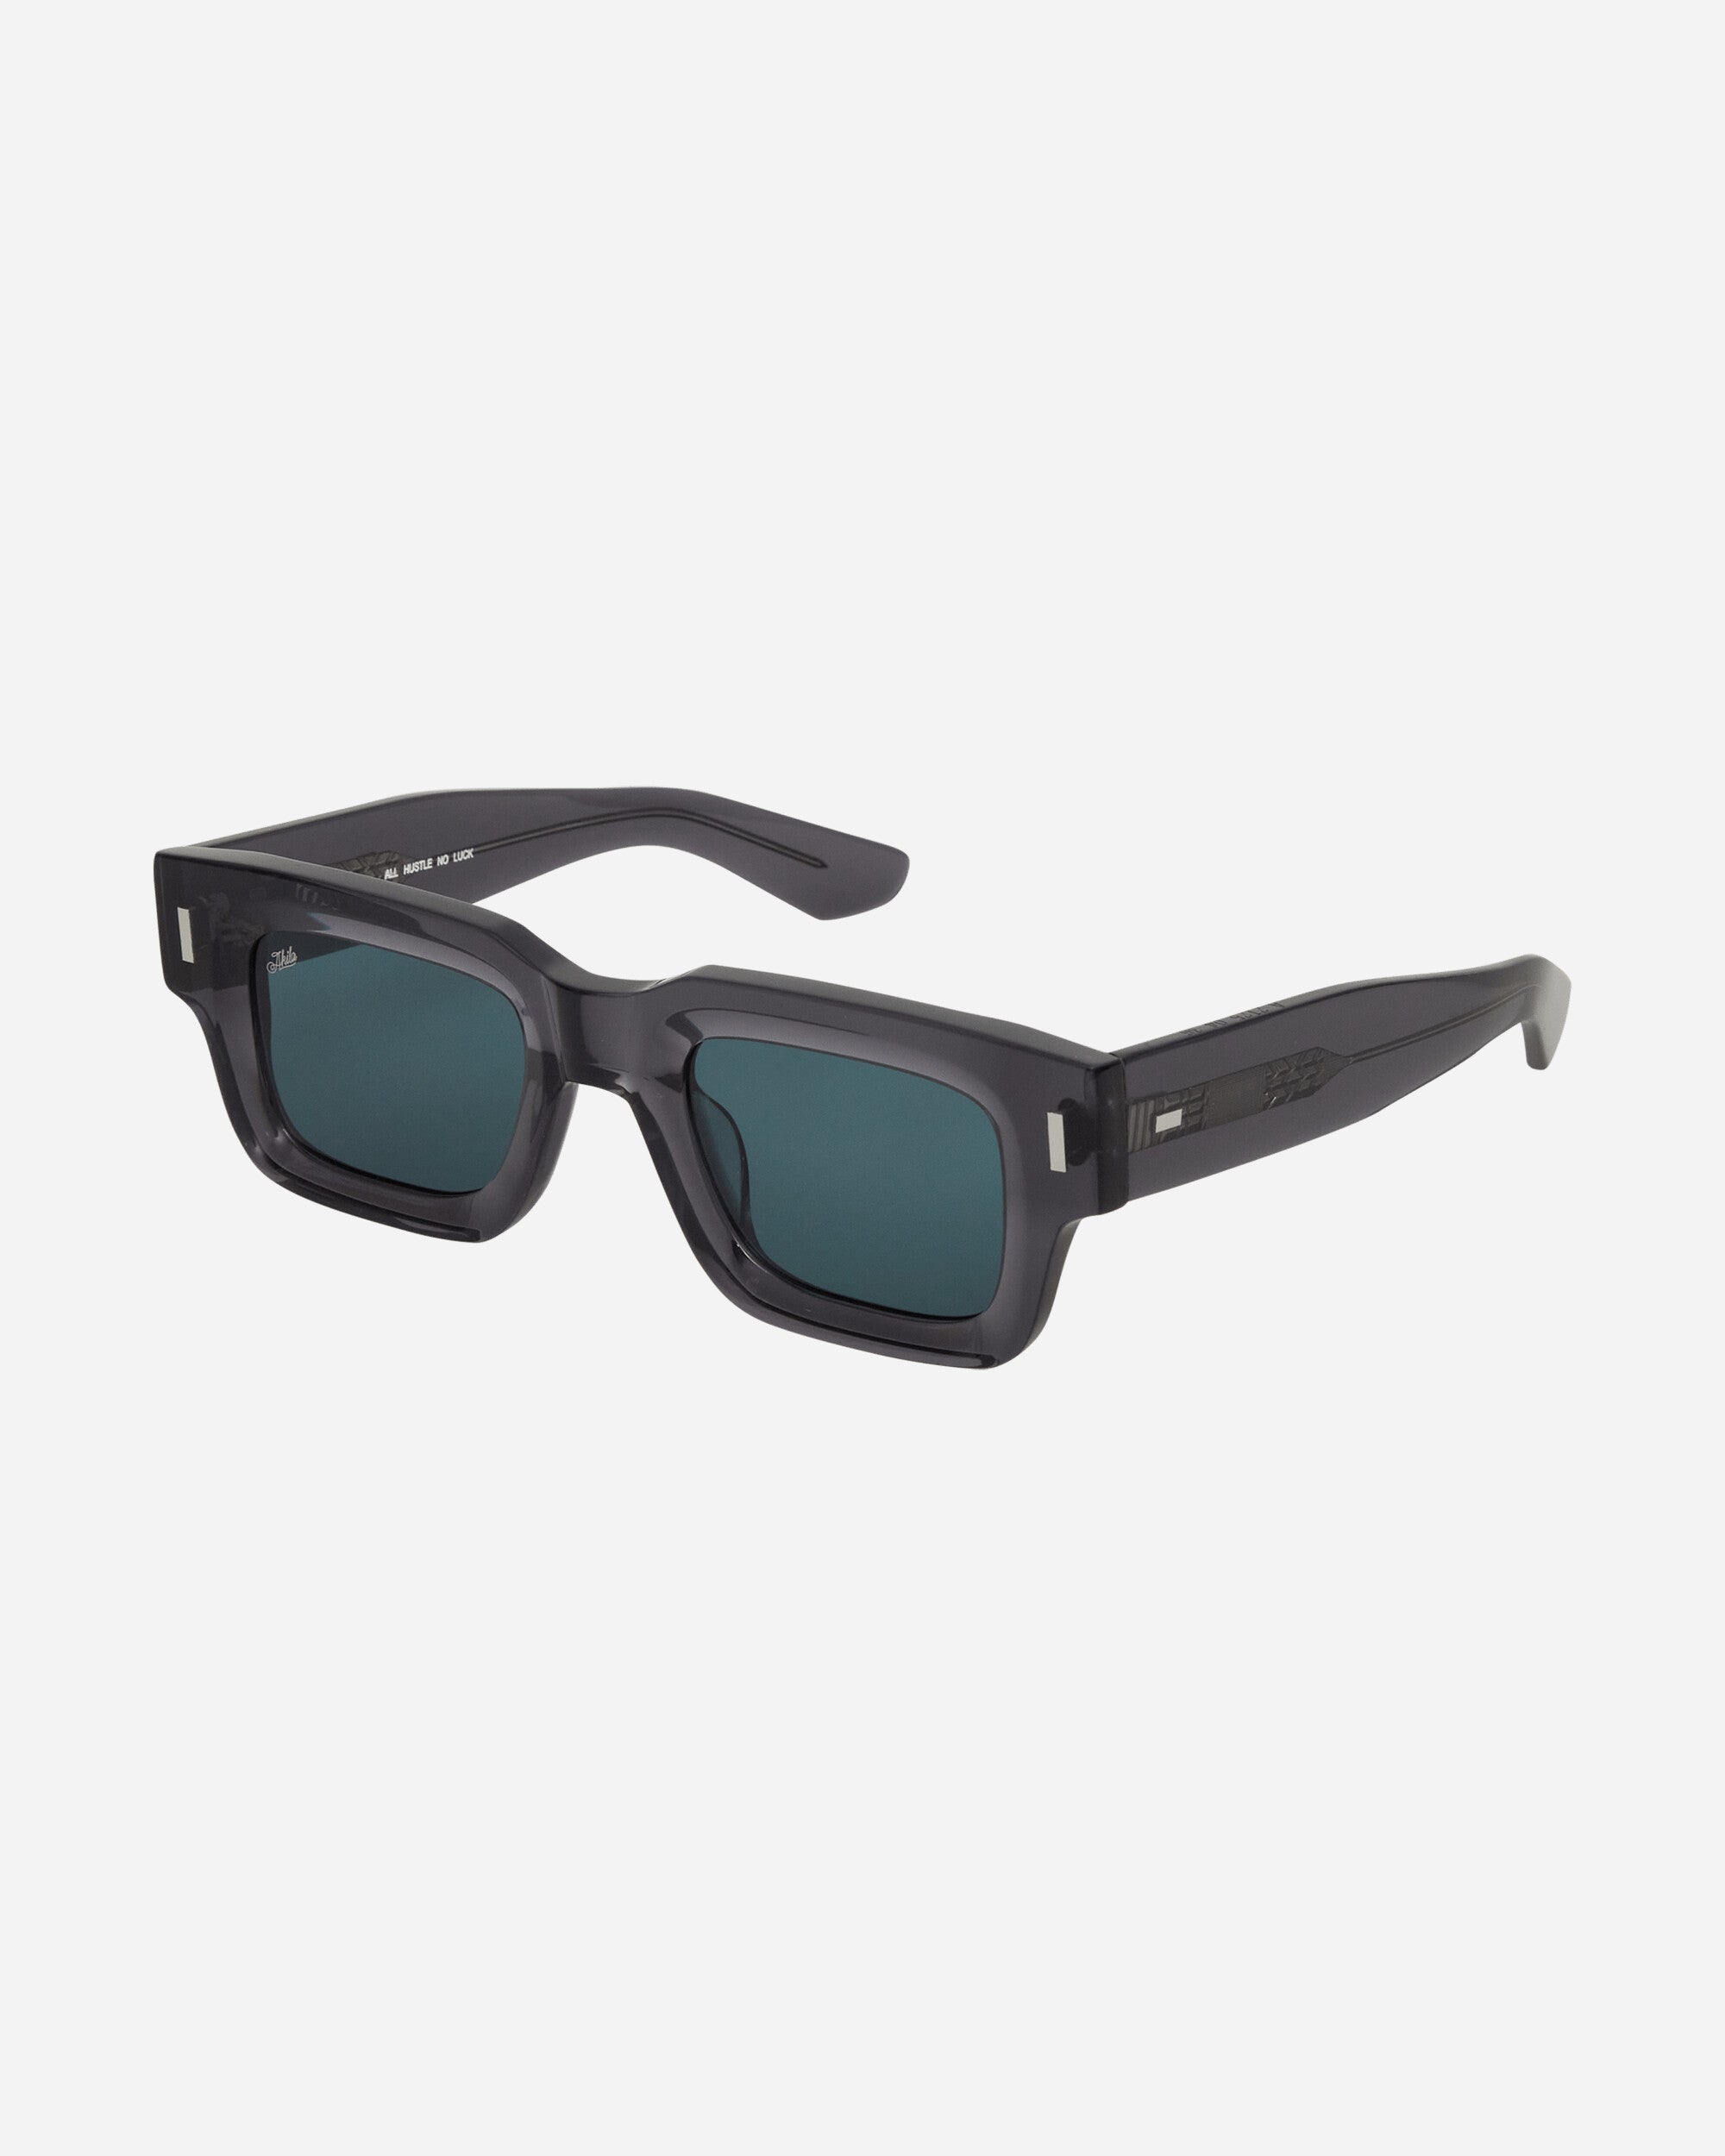 AKILA Ares Cement/Viridian Eyewear Sunglasses 212504 36